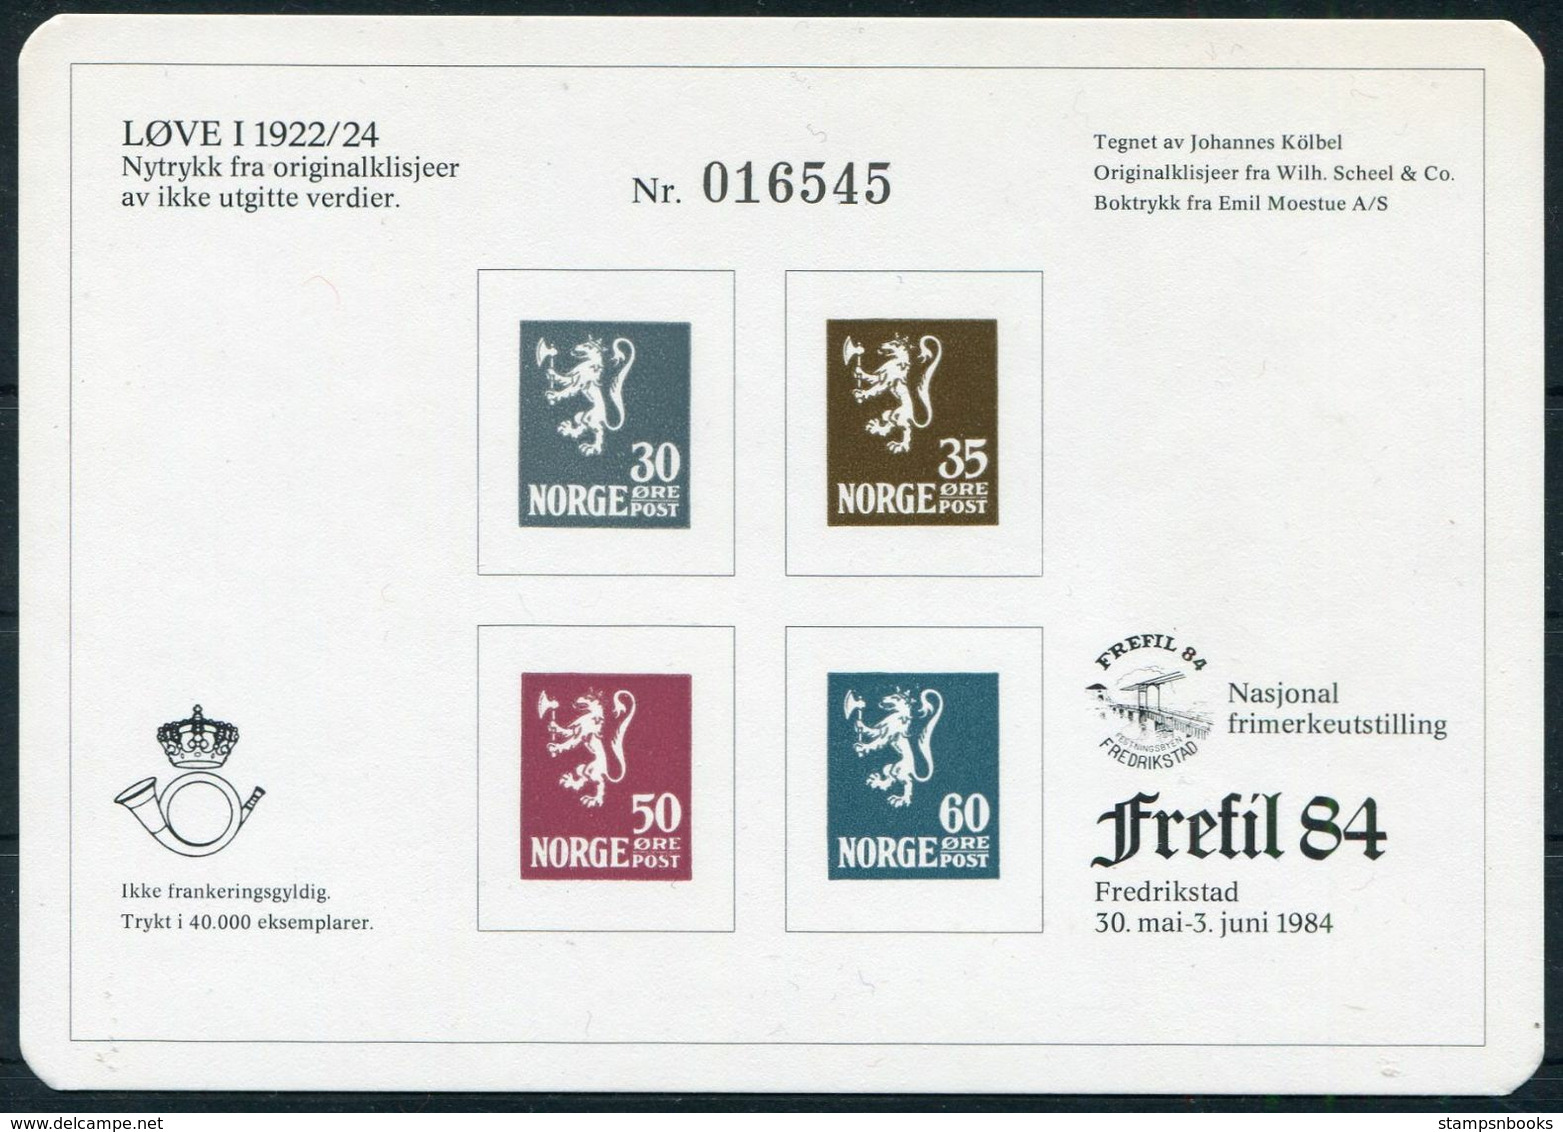 1984 Norway Stamp Exhibition Souvenir Sheet FREFIL 84 Lions Fredrikstad Bridge - Proofs & Reprints